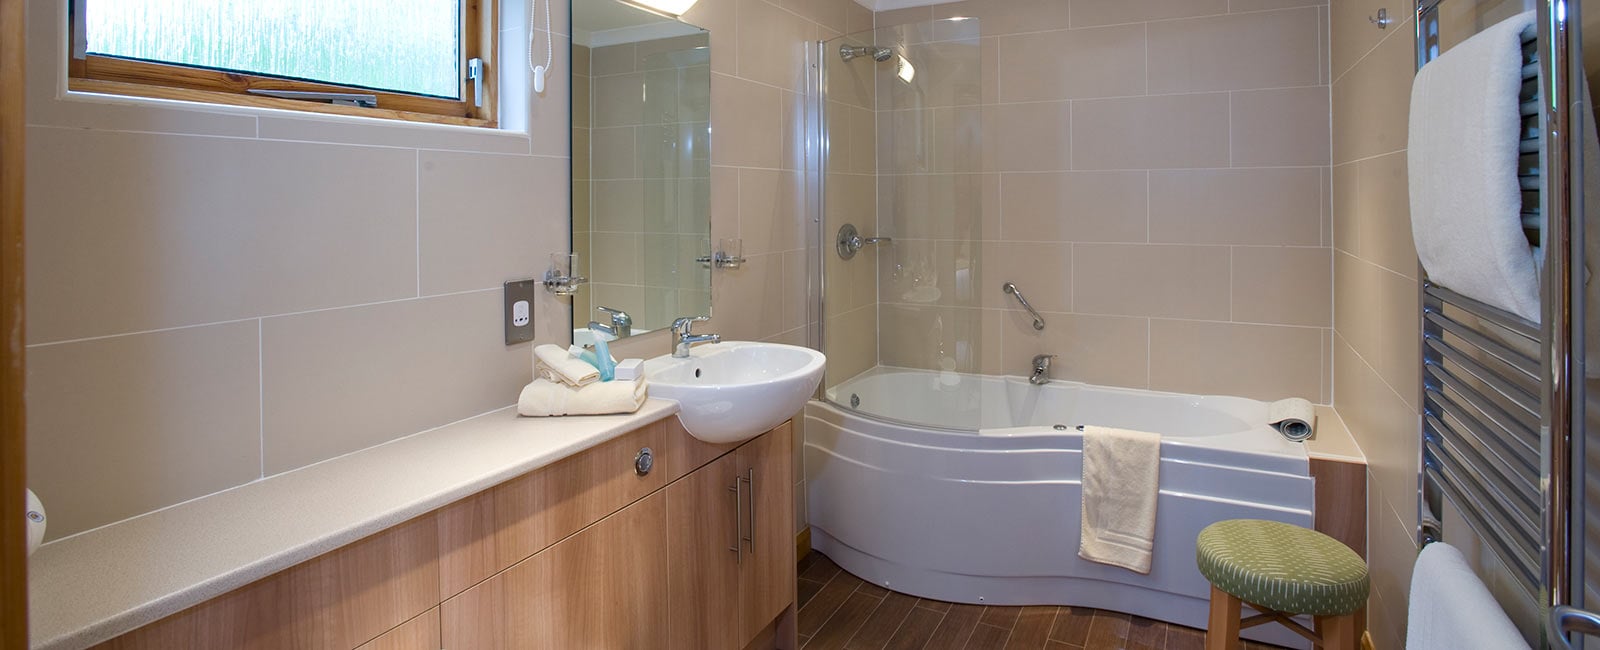 Bathroom at Hilton Grand Vacations Club at Craigendarroch Lodges in Royal Deeside, Scotland